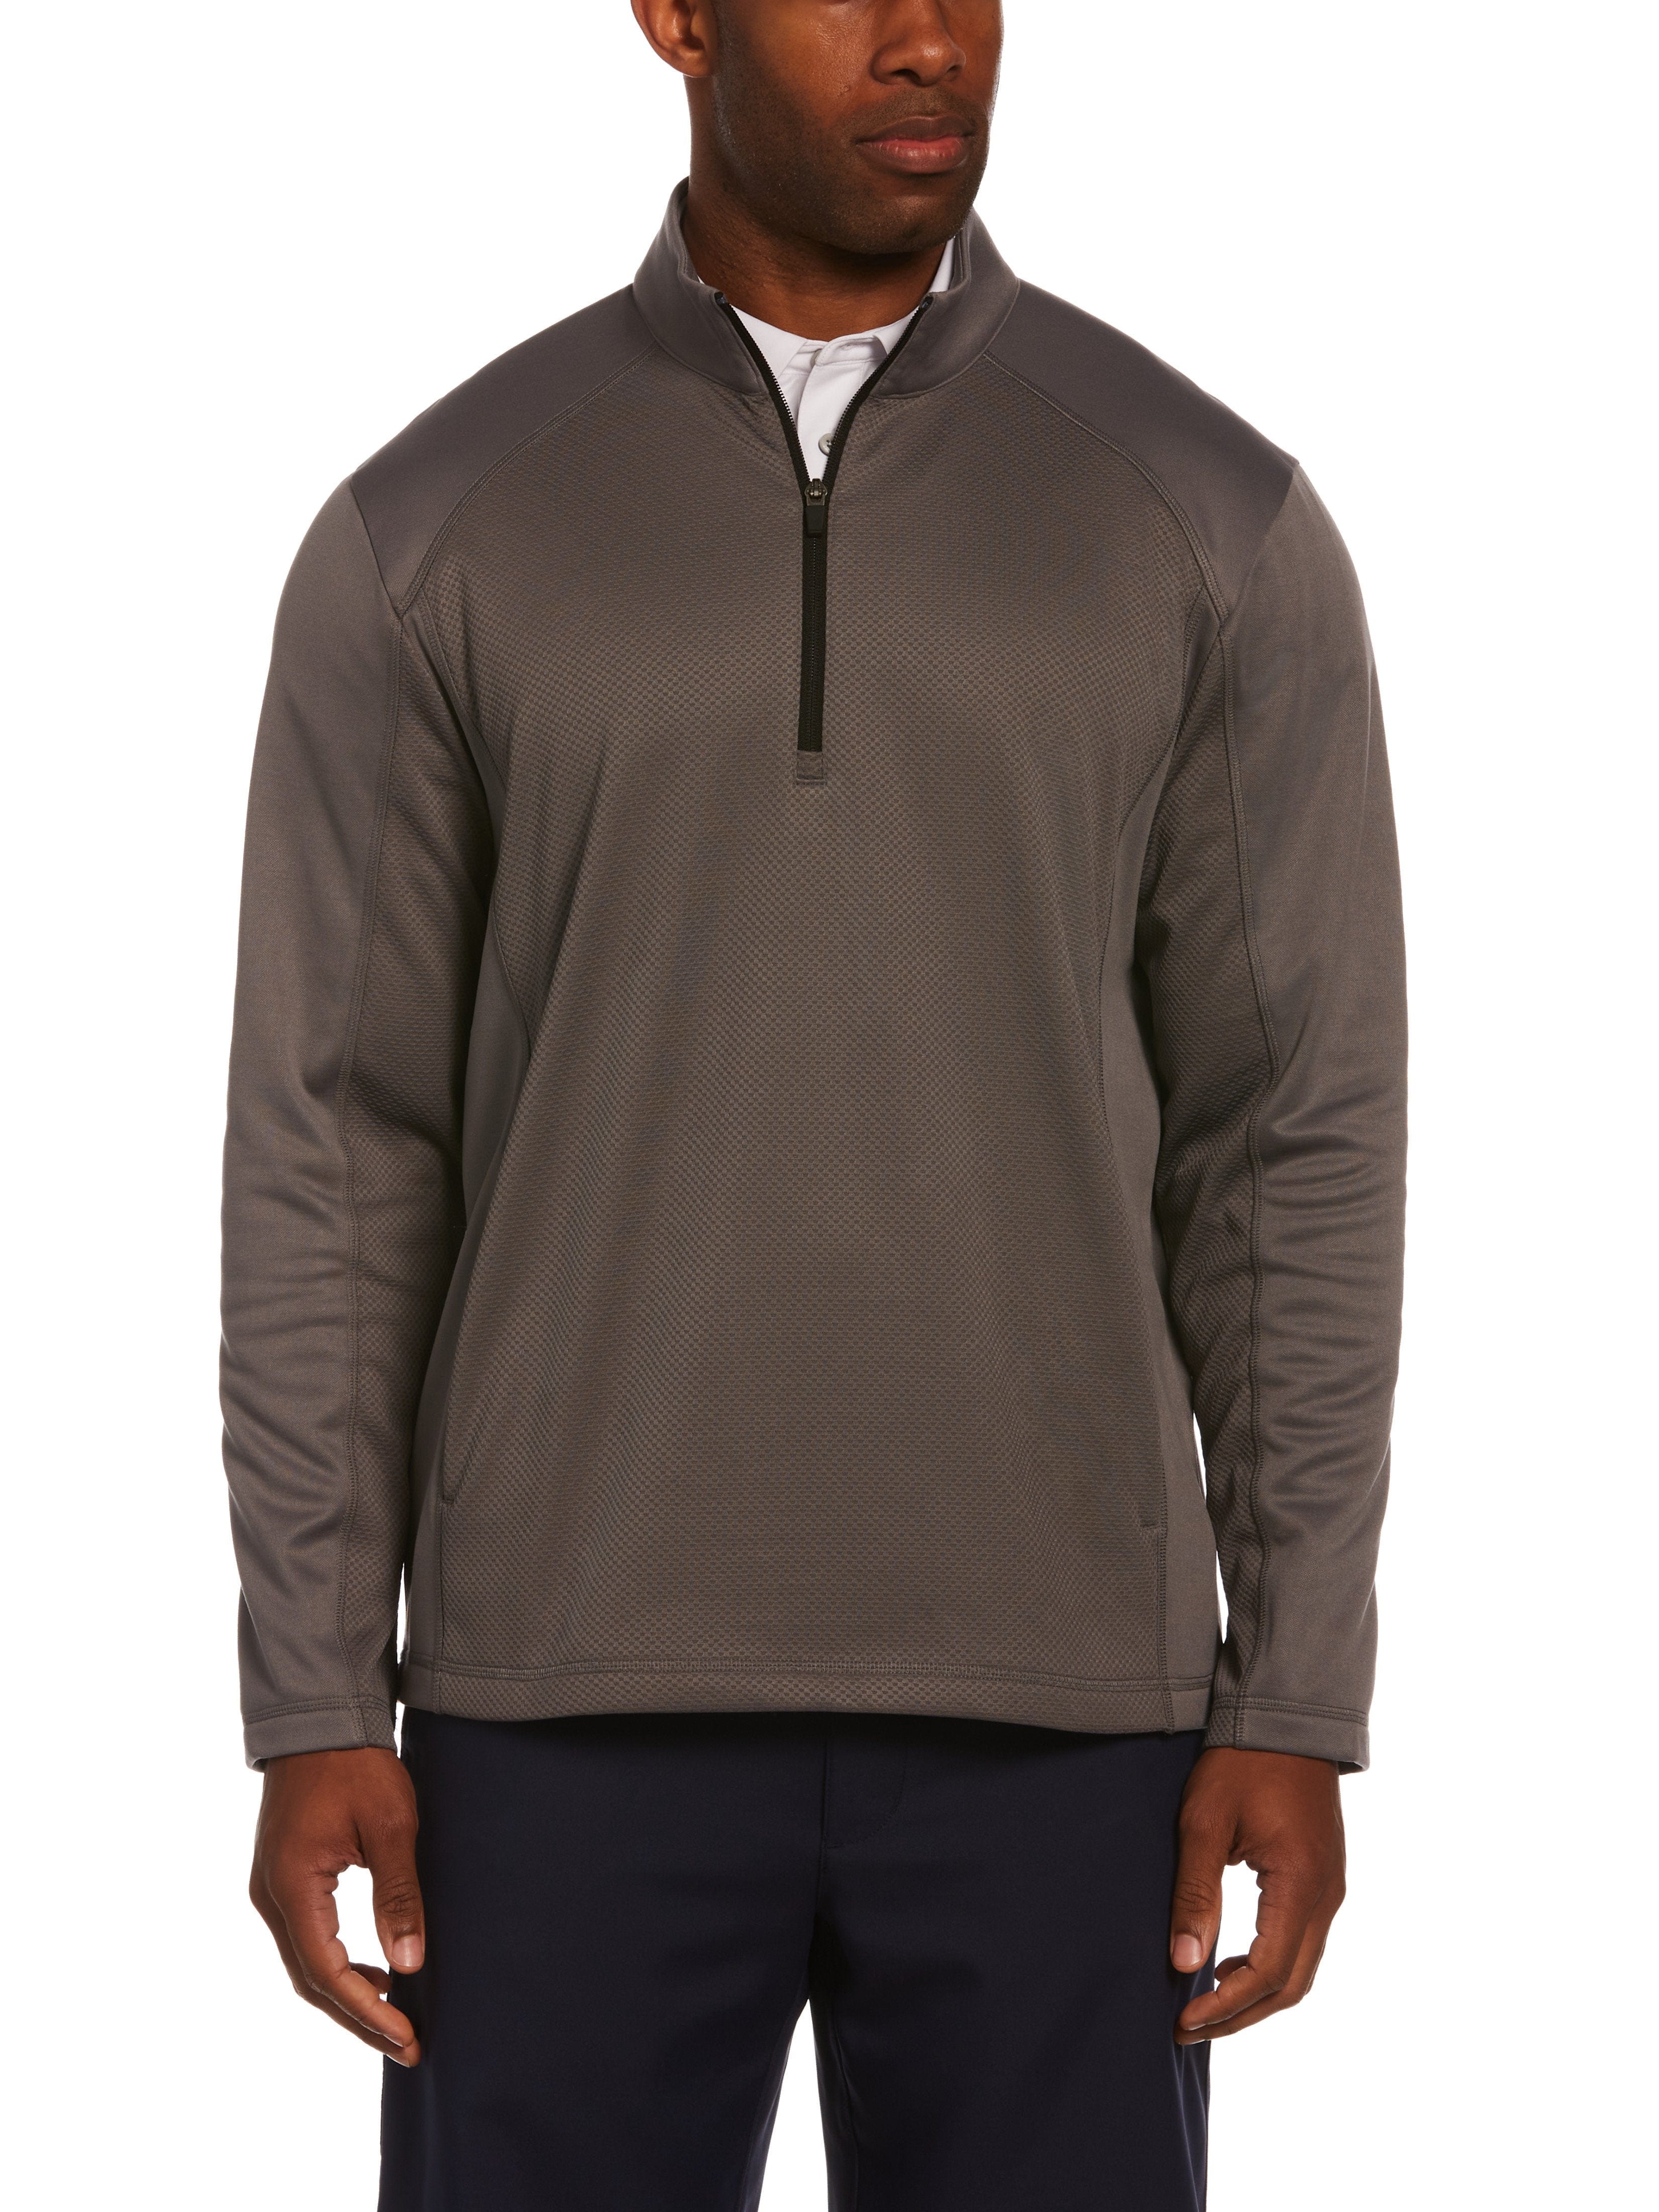 PGA TOUR Apparel Mens Mixed Texture Fleece 1/4 Zip Golf Jacket Top, Size 2XL, Quiet Shade Gray, 100% Polyester | Golf Apparel Shop